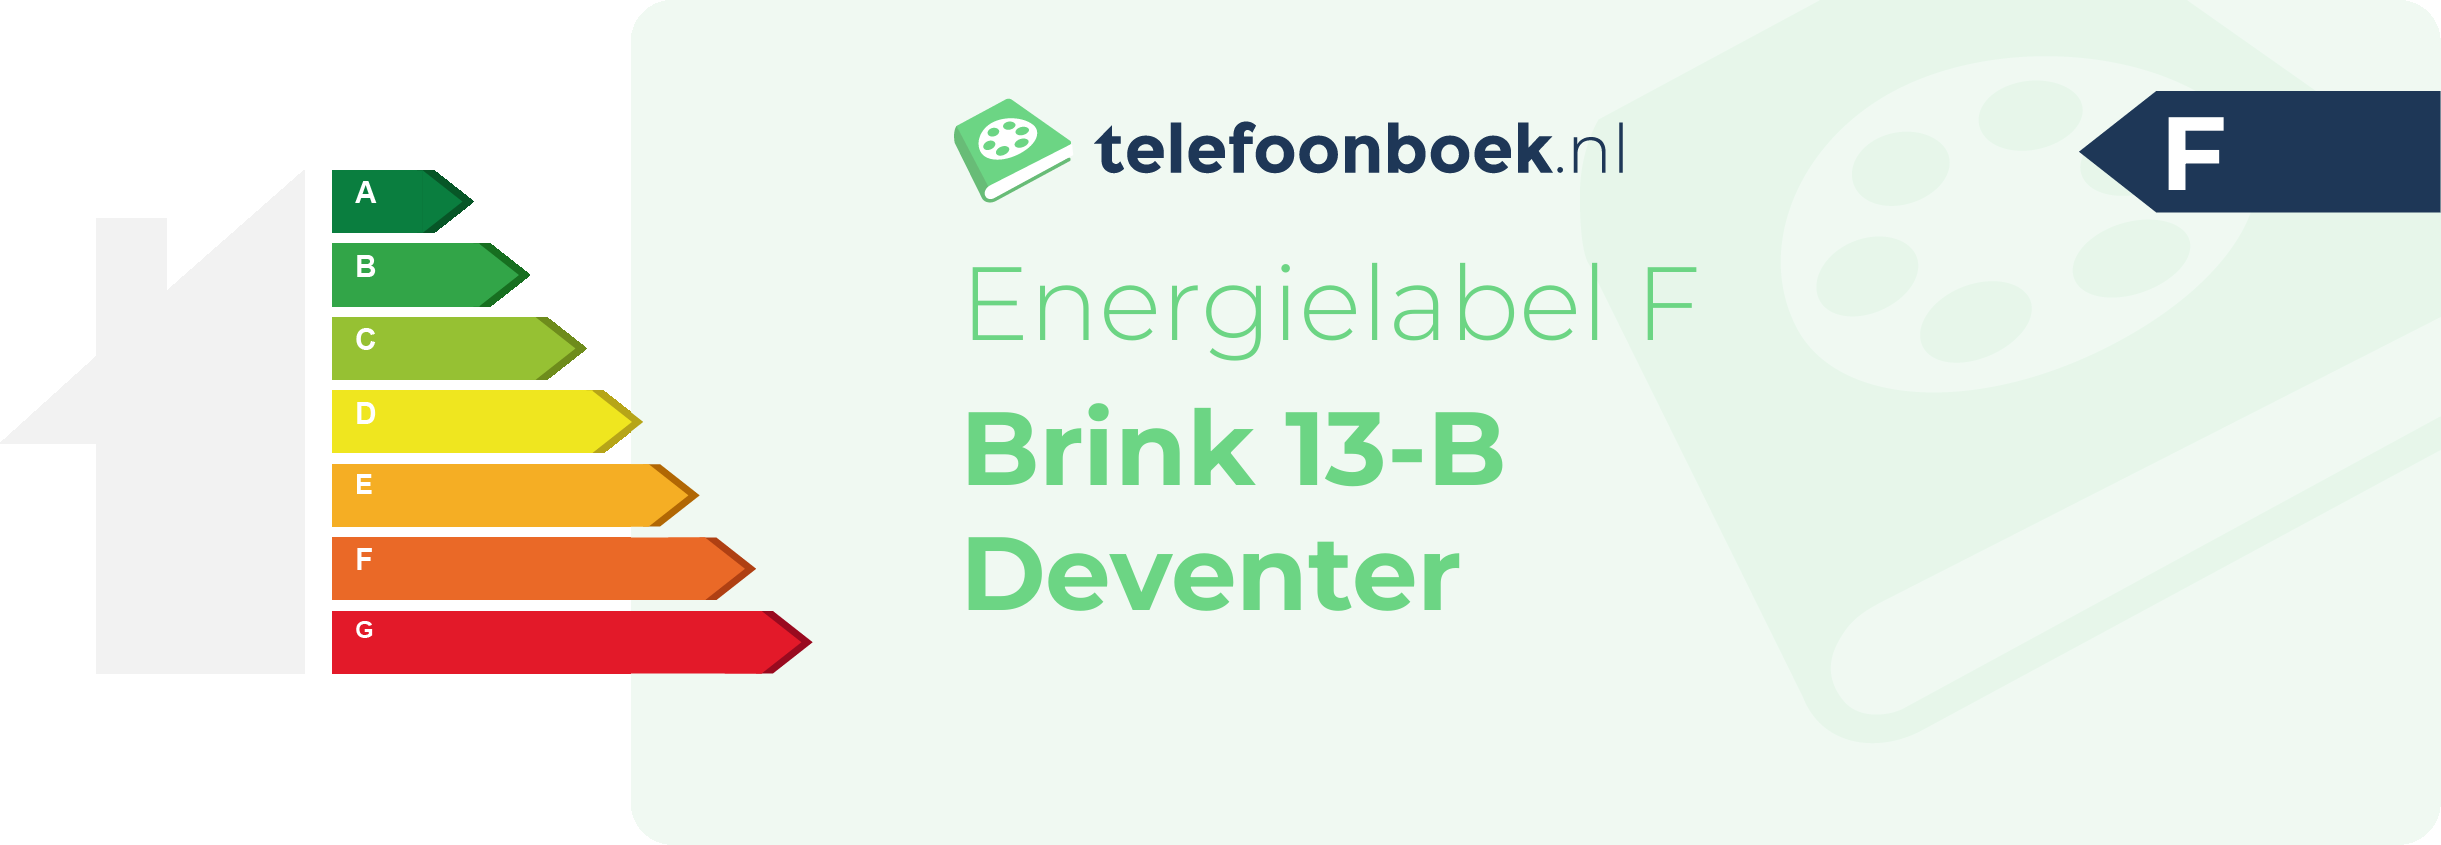 Energielabel Brink 13-B Deventer